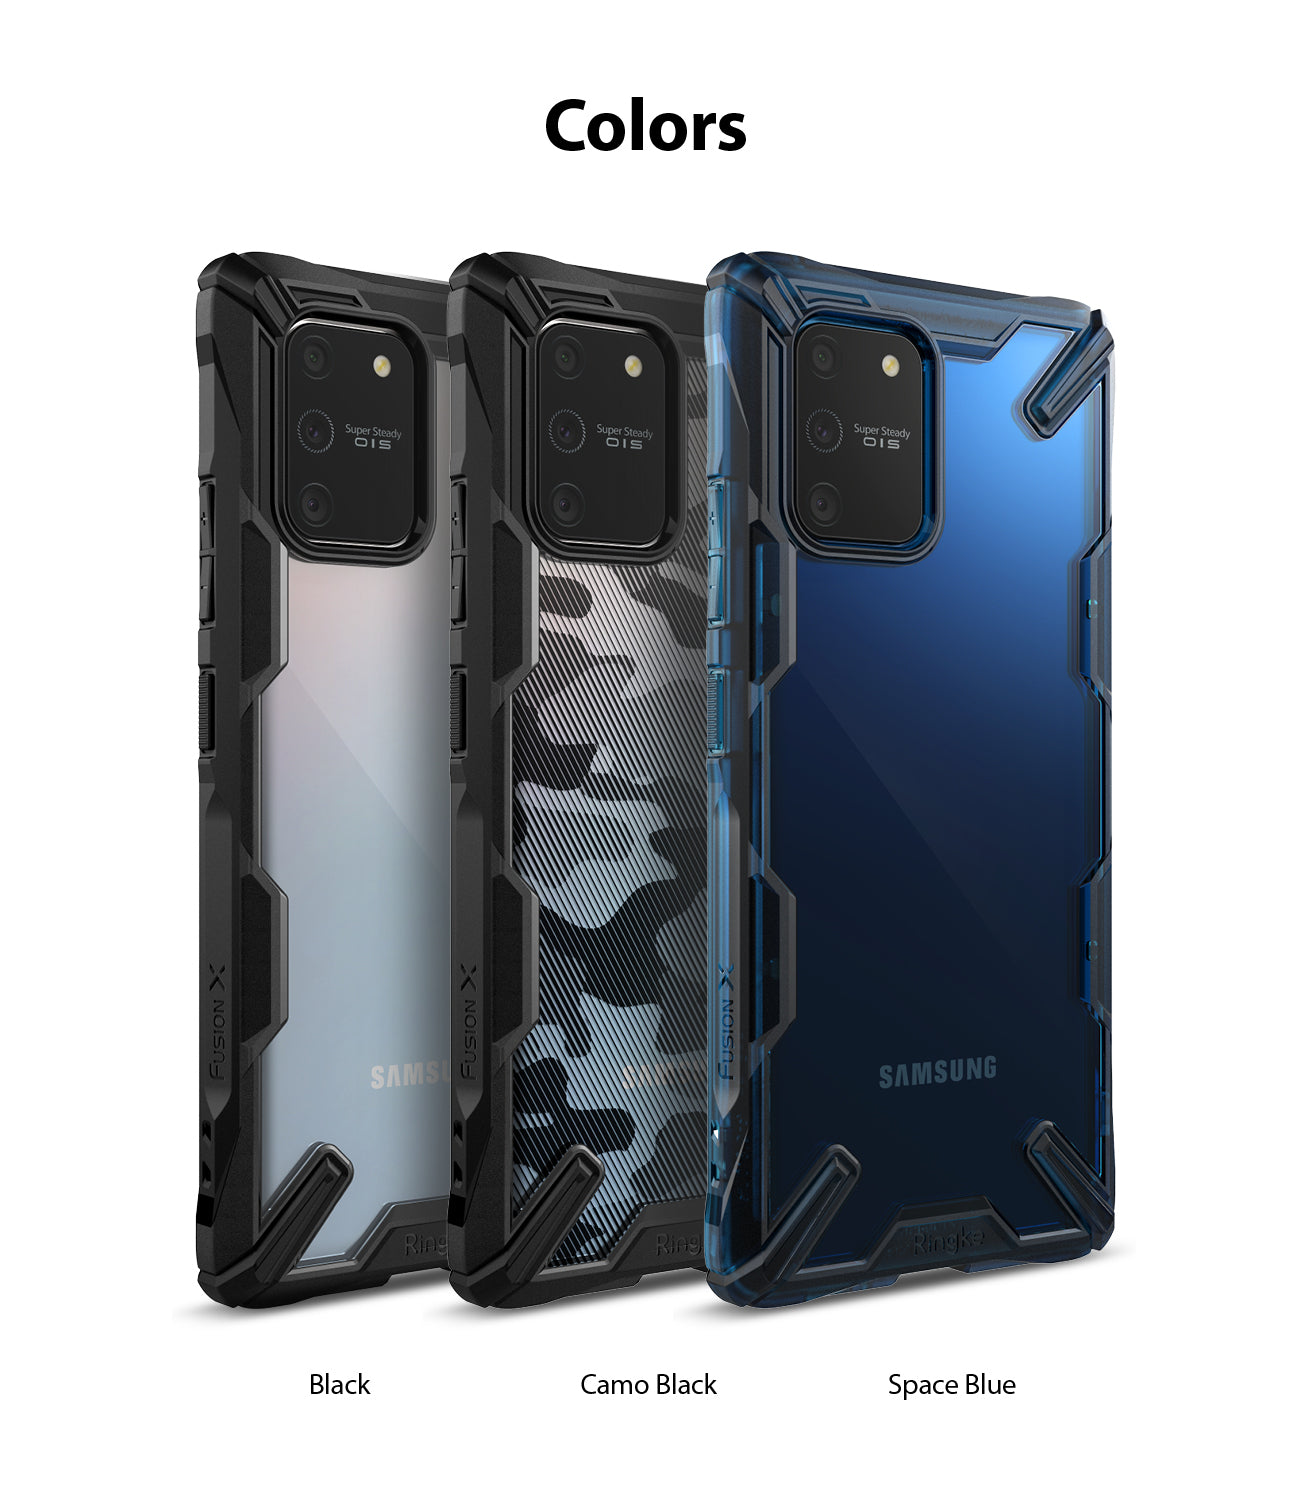 Ringke Fusion-X Case for Galaxy S10 Lite, Black, Camo Black, Space Blue